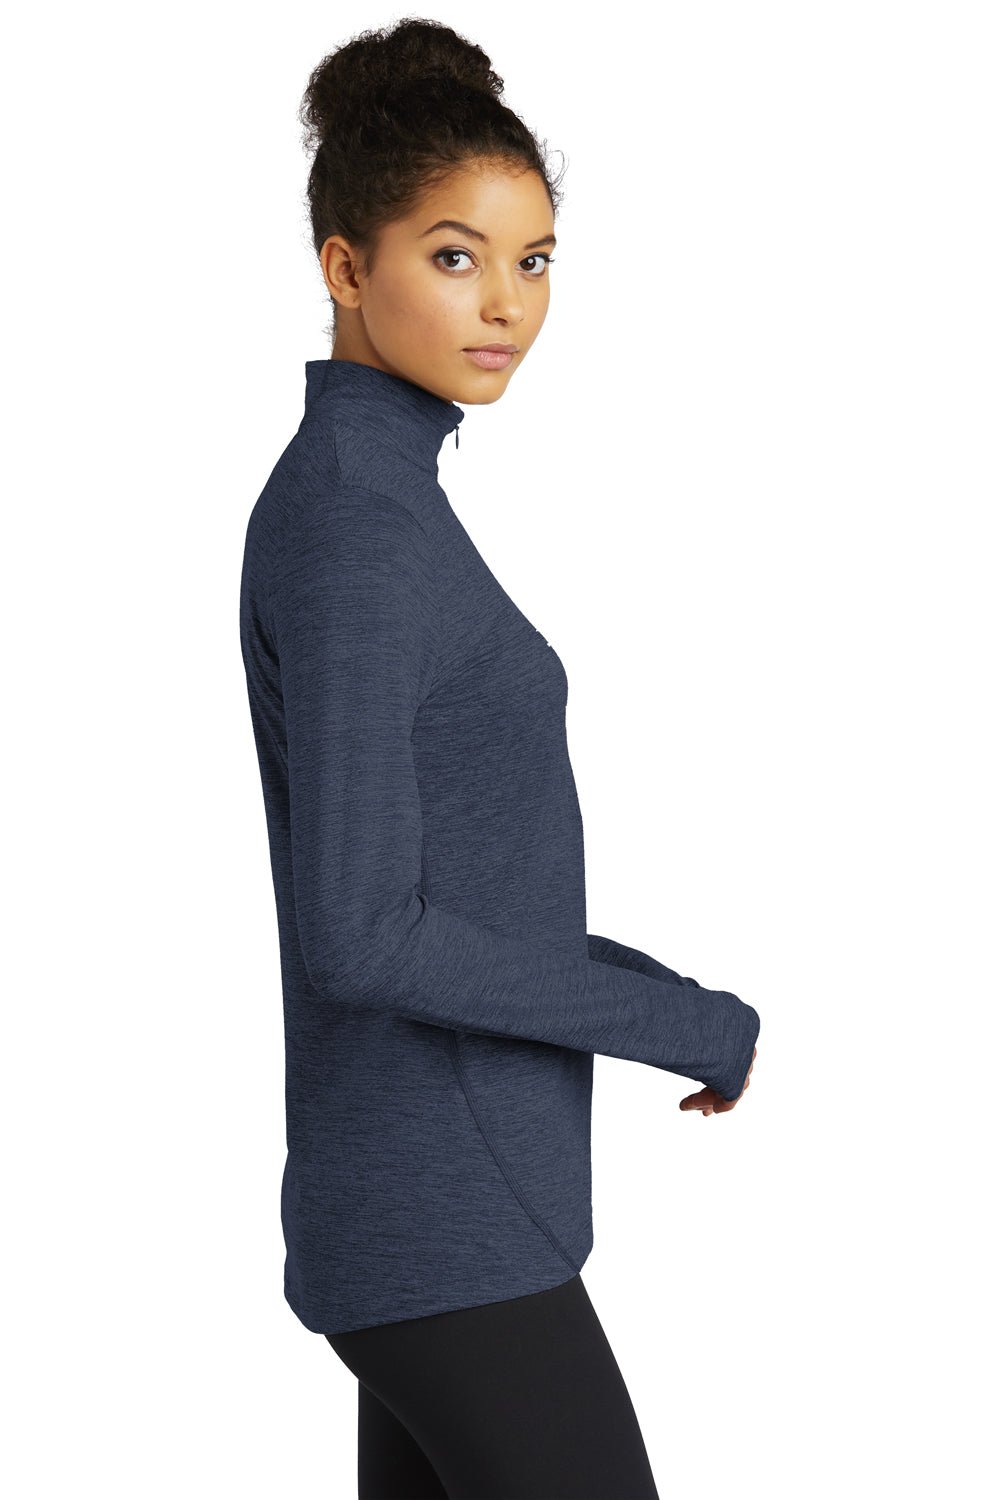 Sport-Tek Womens Exchange 1.5 Long Sleeve 1/4 Zip T-Shirt Heather Dark Denim Blue Side